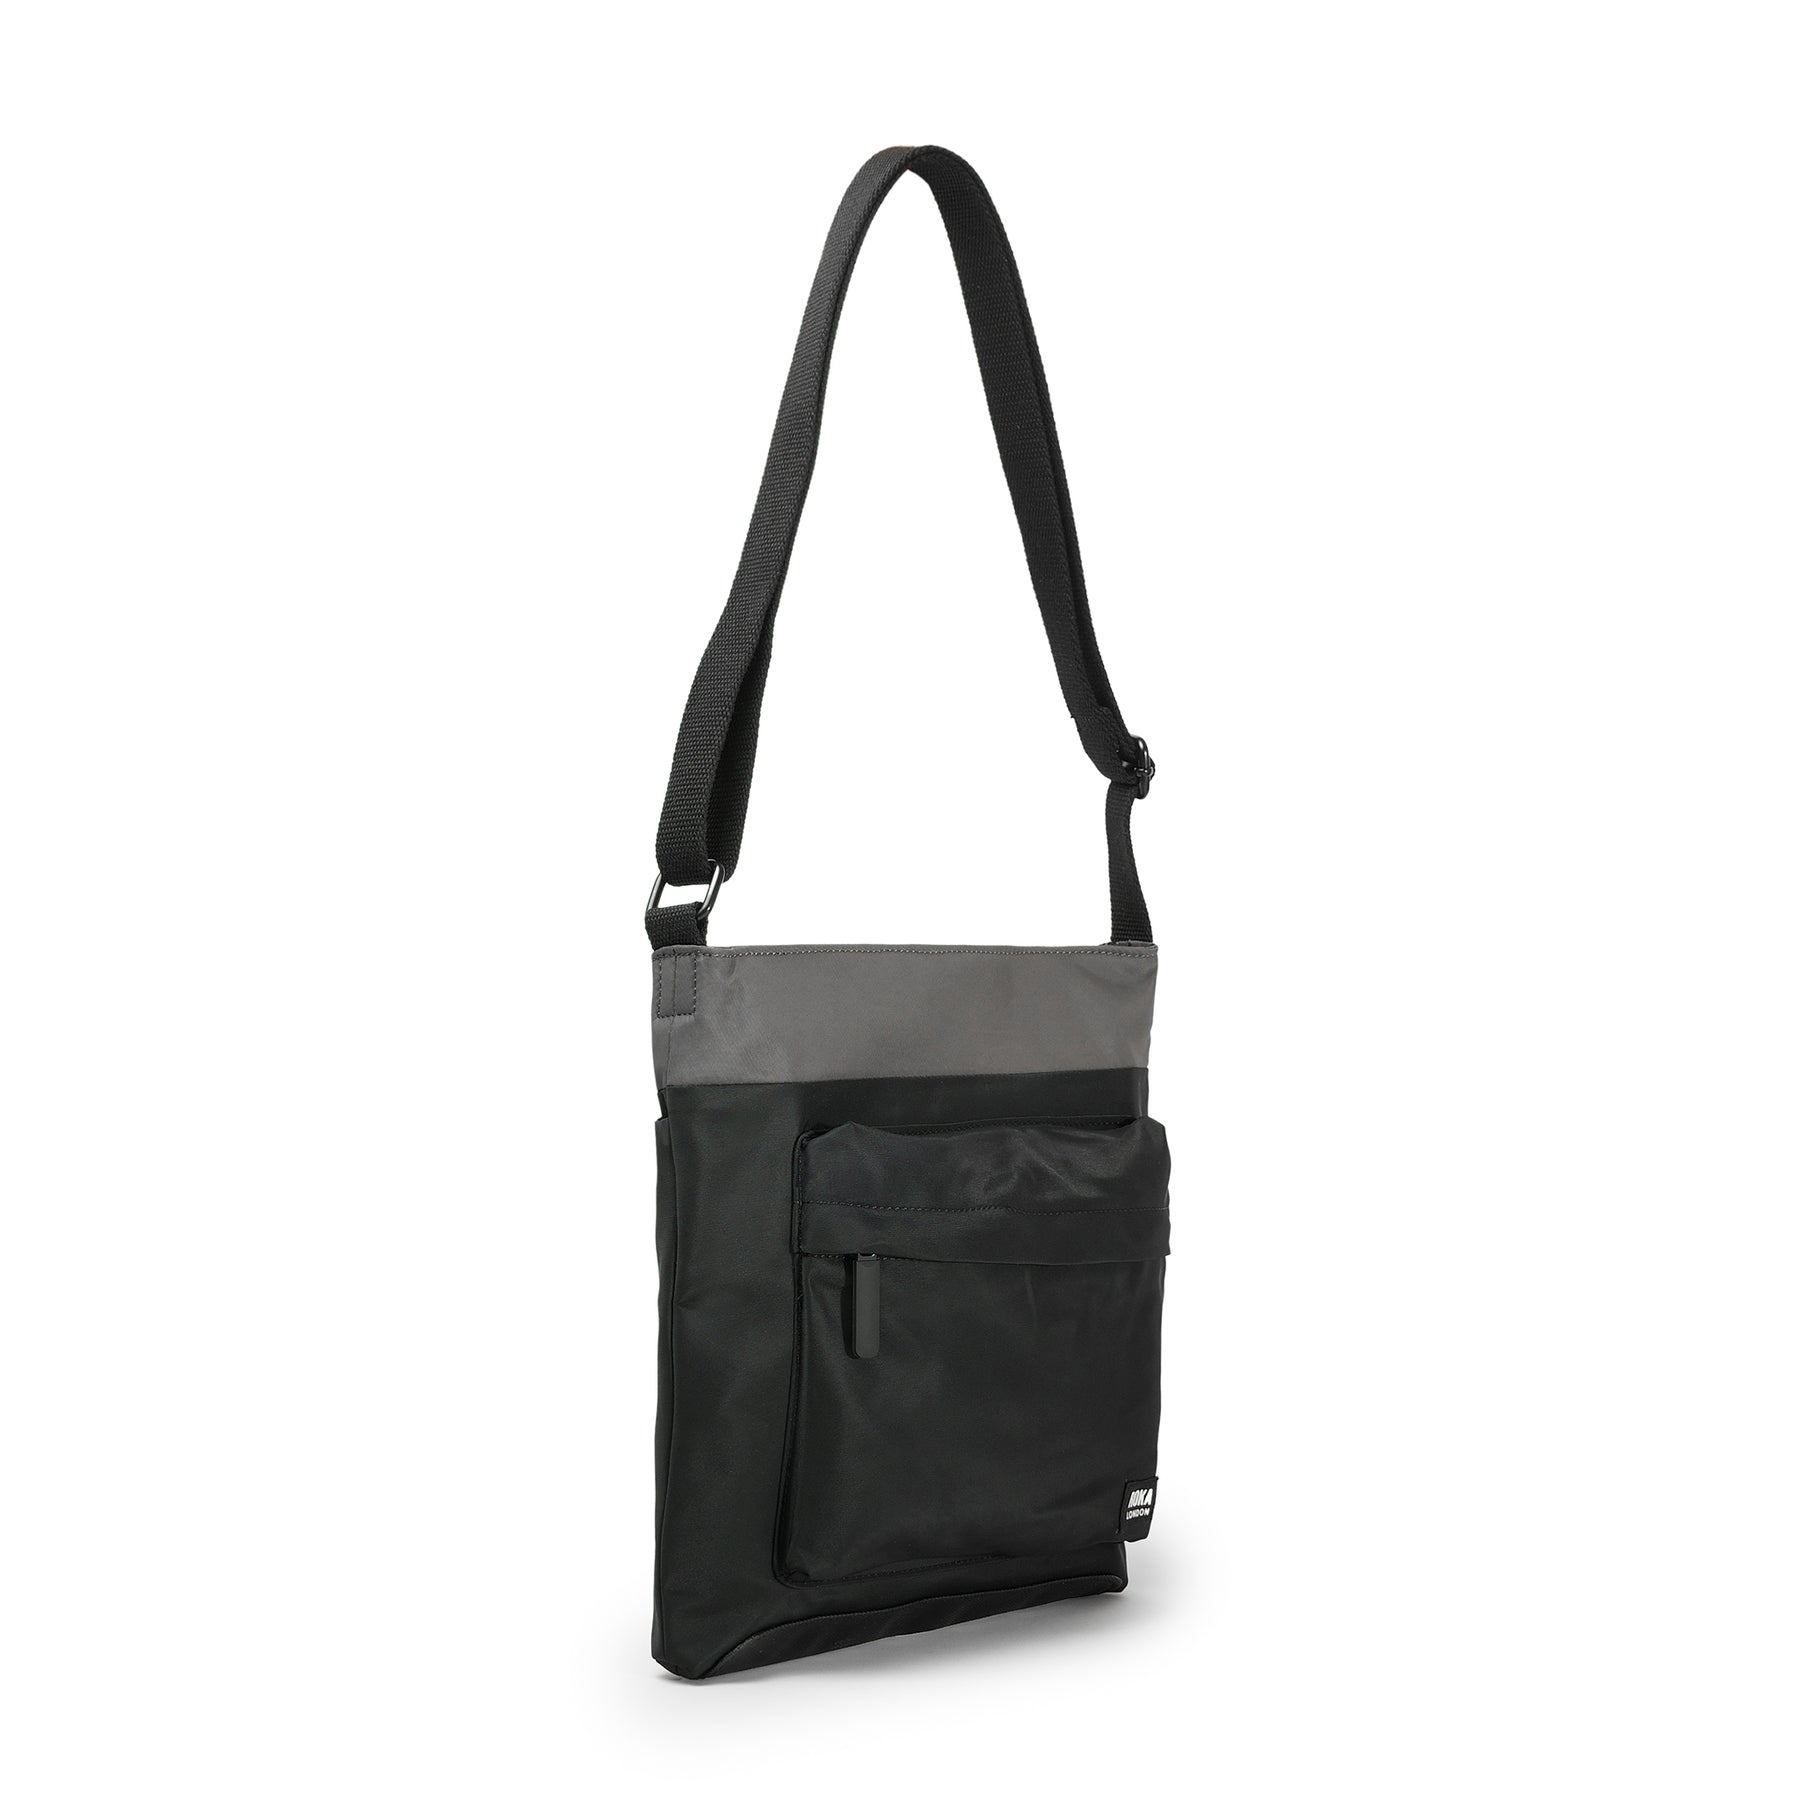 ROKA Creative Waste Kennington B Black / Graphite Medium Recycled Nylon Bag